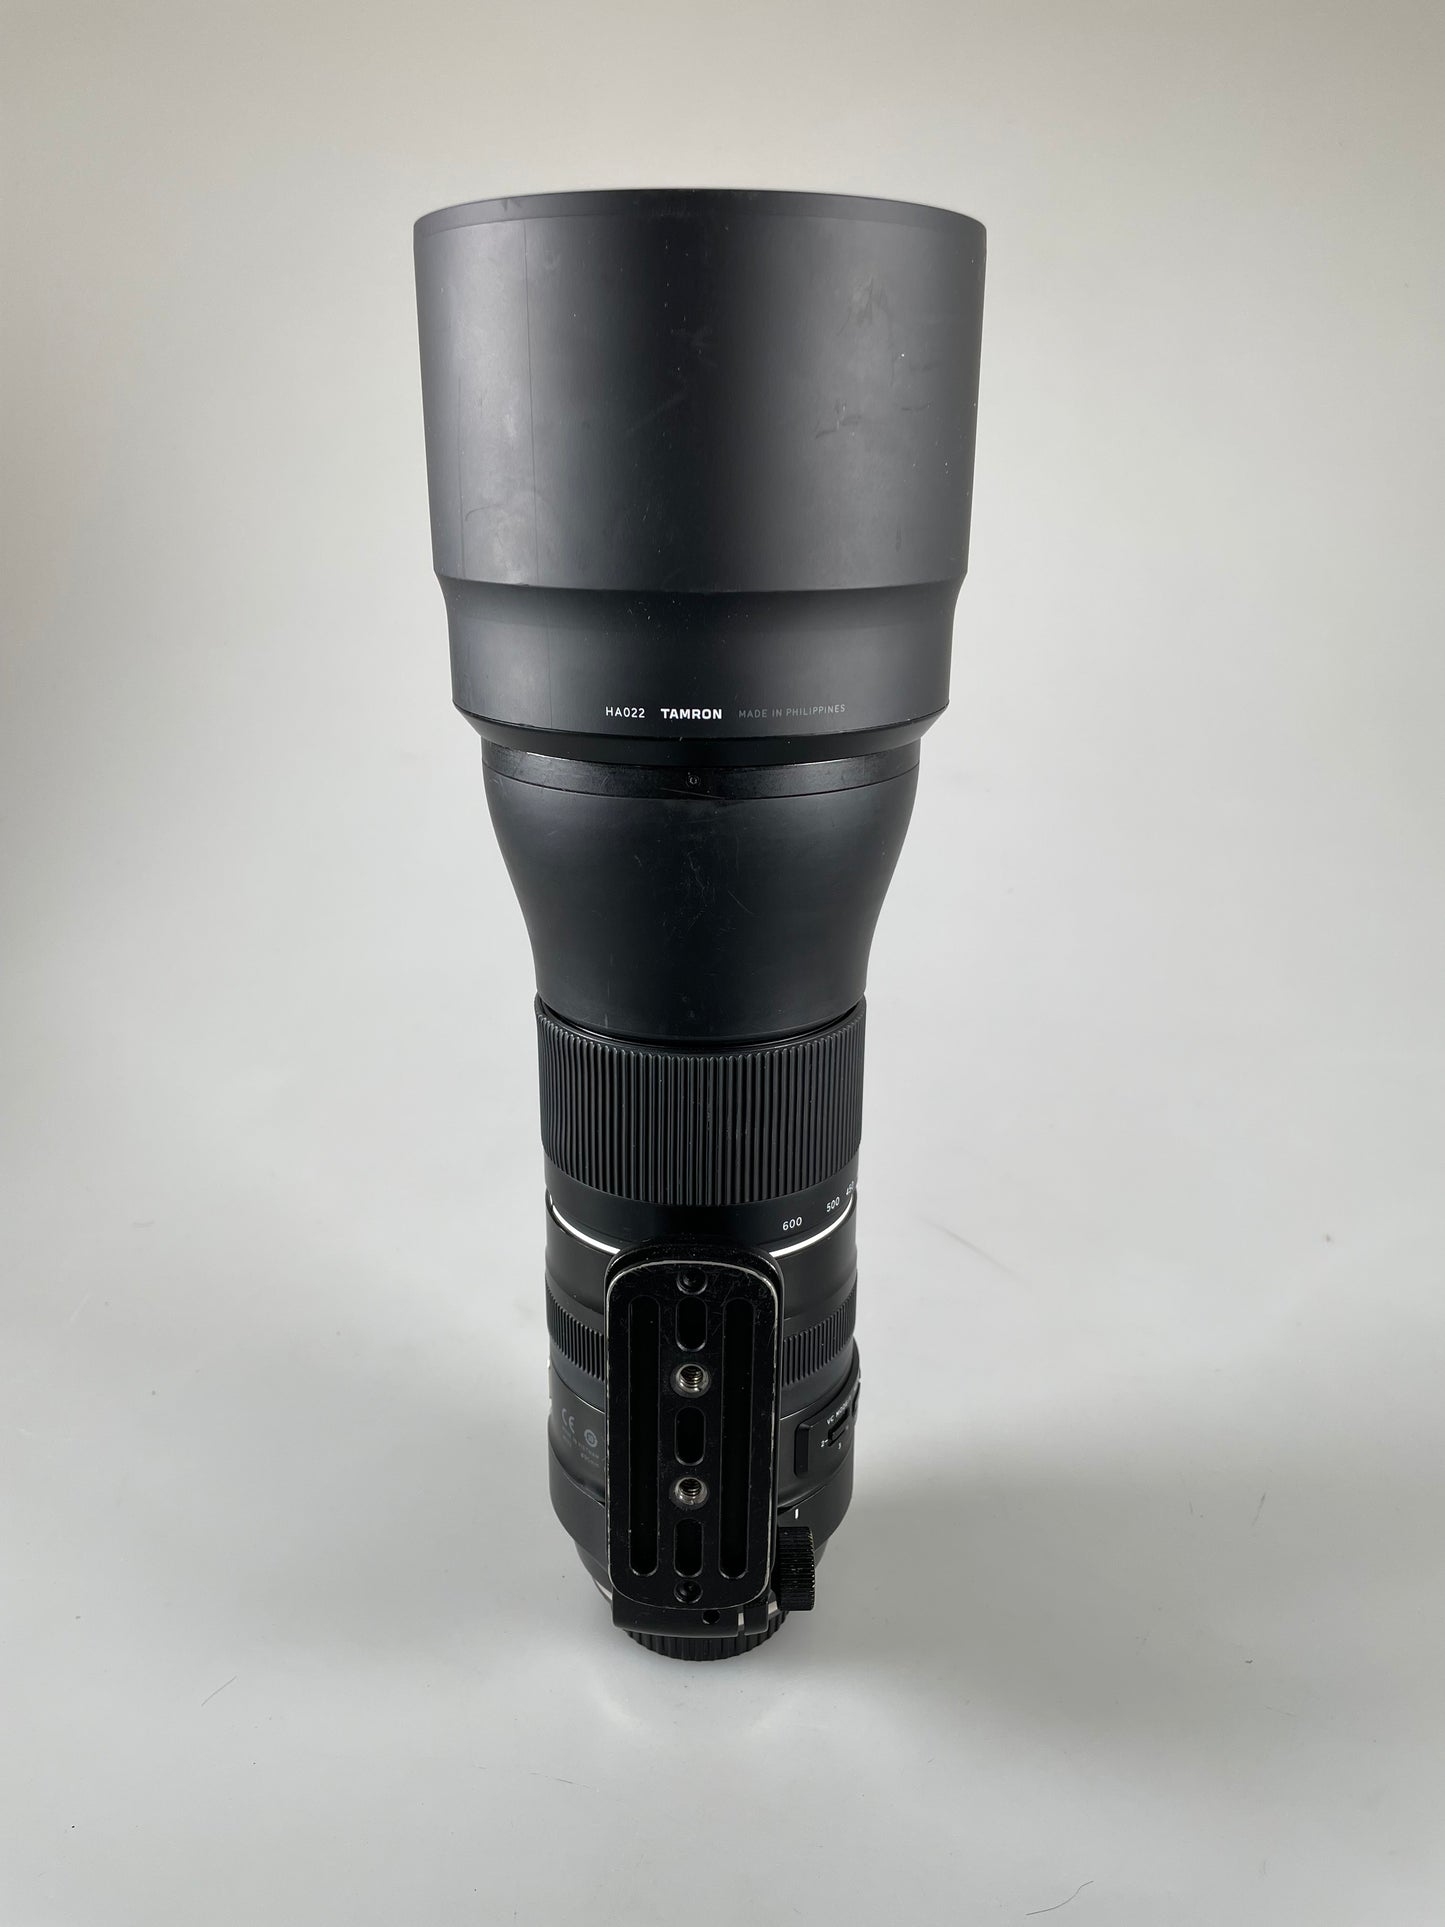 Tamron SP 150-600mm F5-6.3 Di VC USD G2 Lens for Nikon